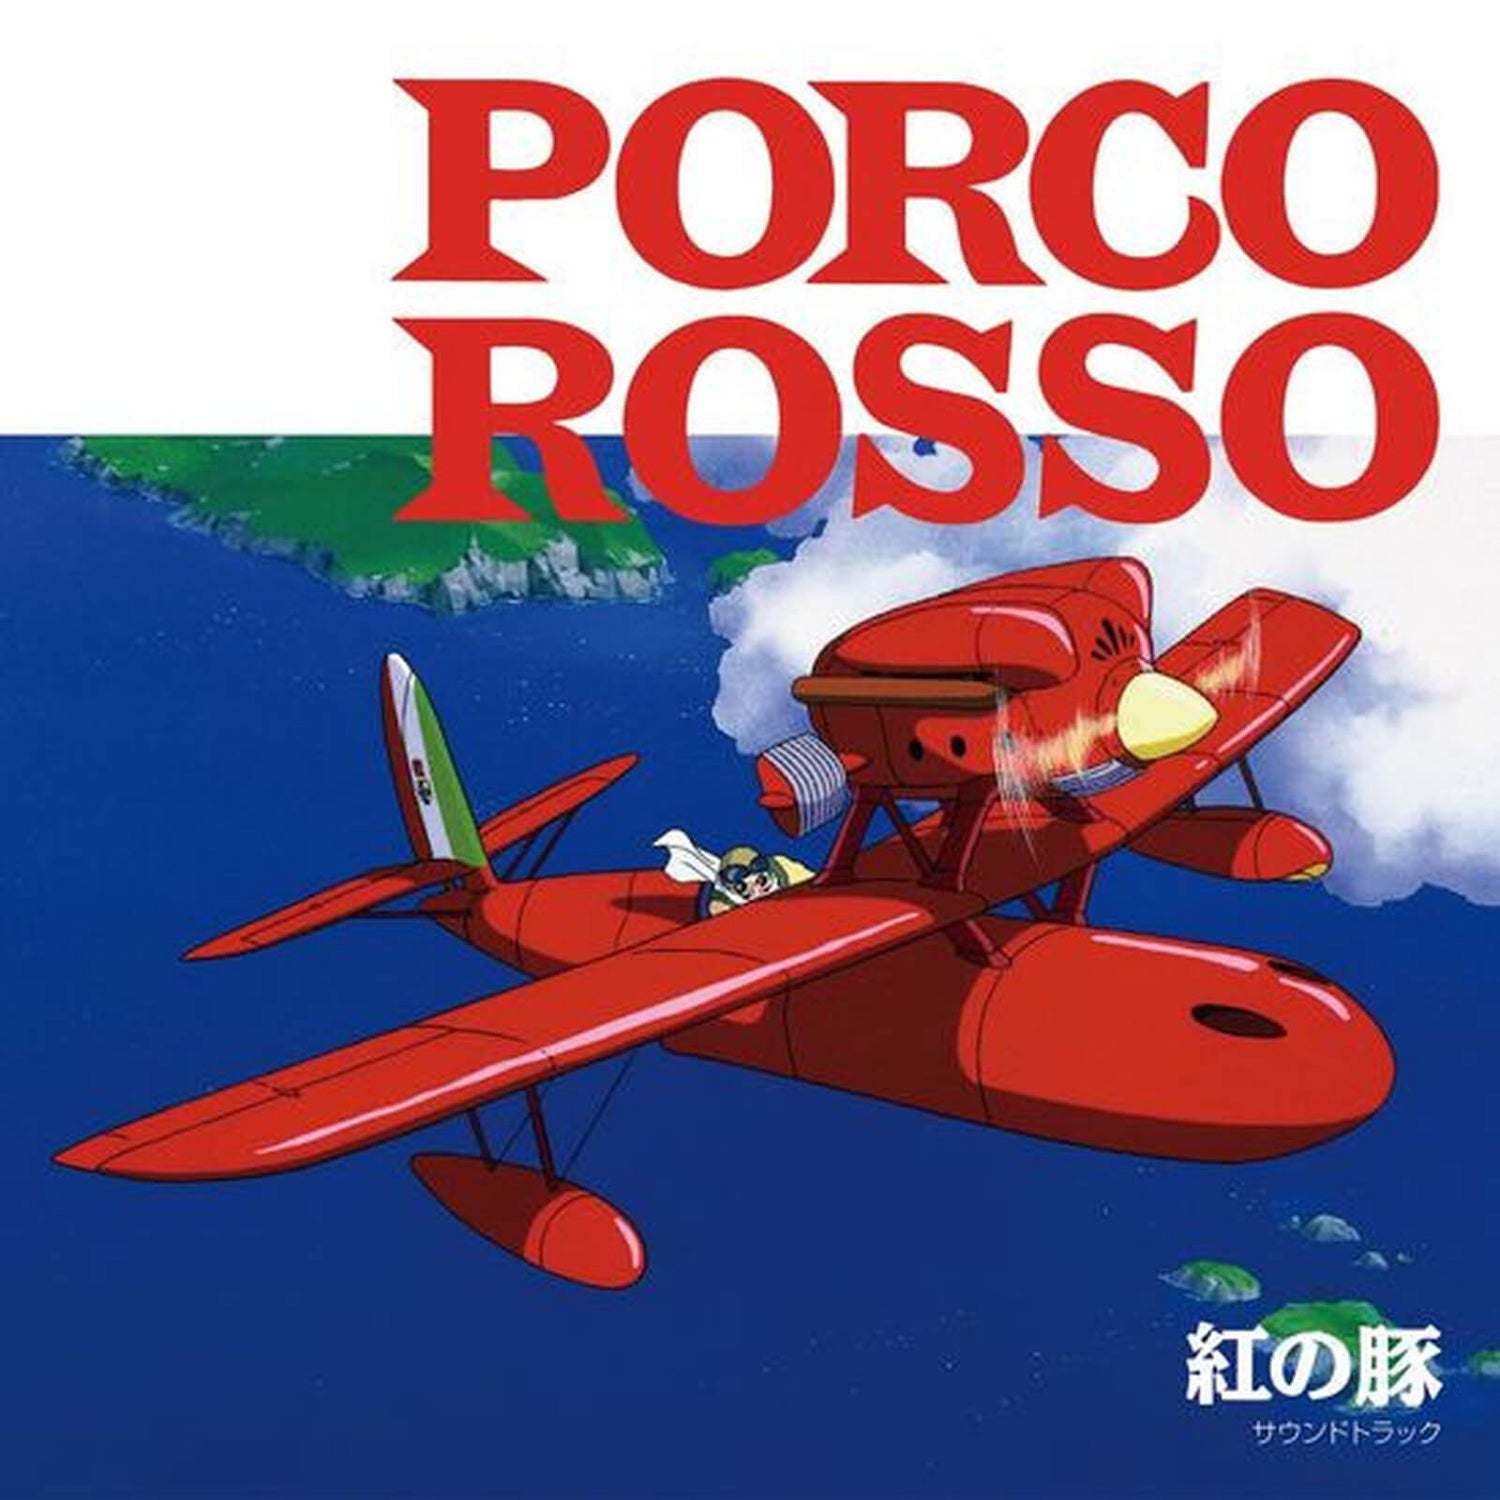 Studio Ghibli Records - Porco Rosso: Soundtrack Vinyl